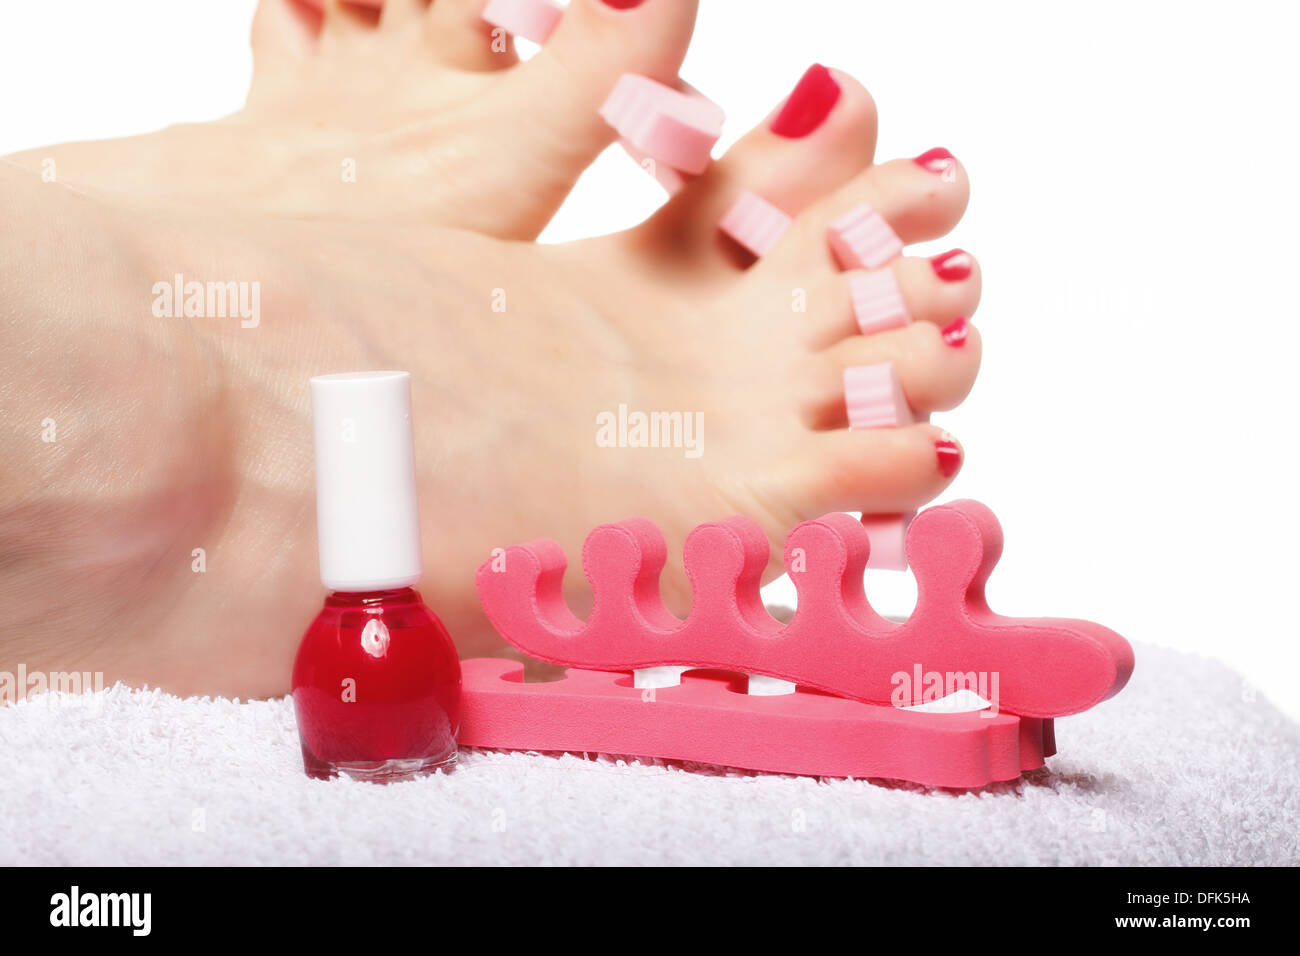 foot pedicure applying woman's feet with red toenails in toe separators ...